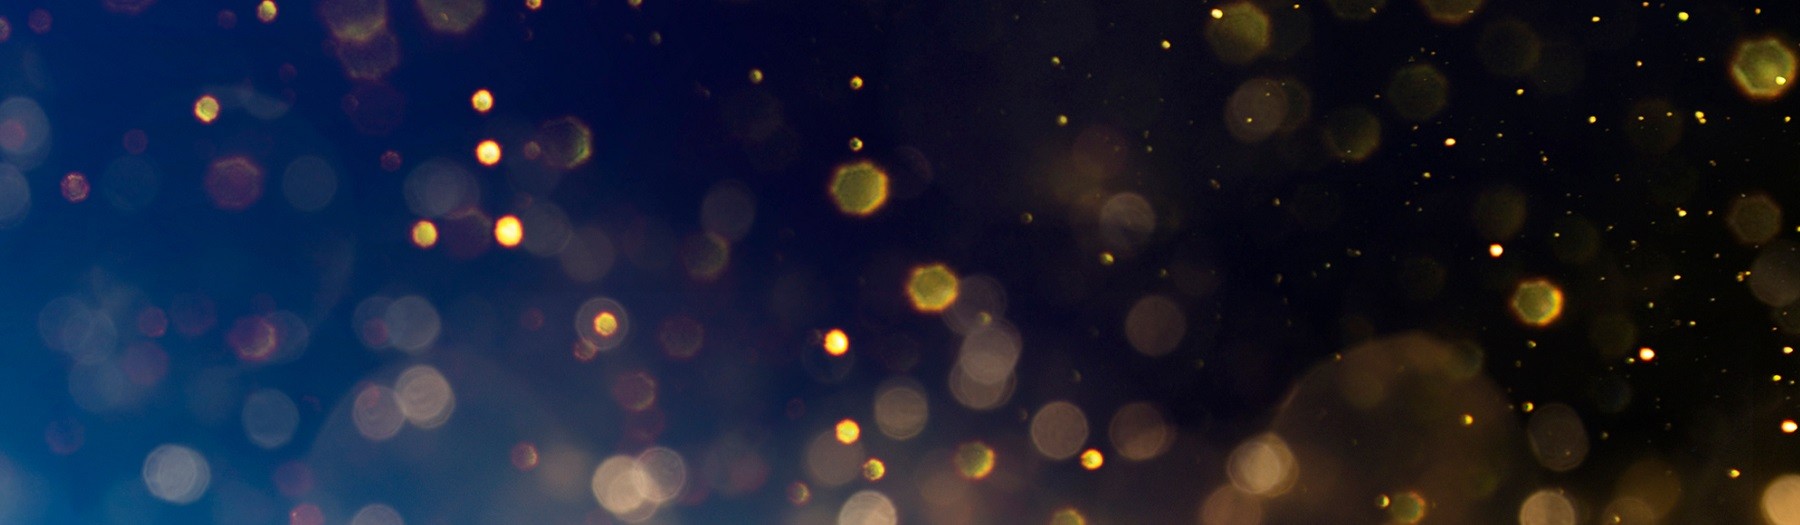 Black background with festive sparkles